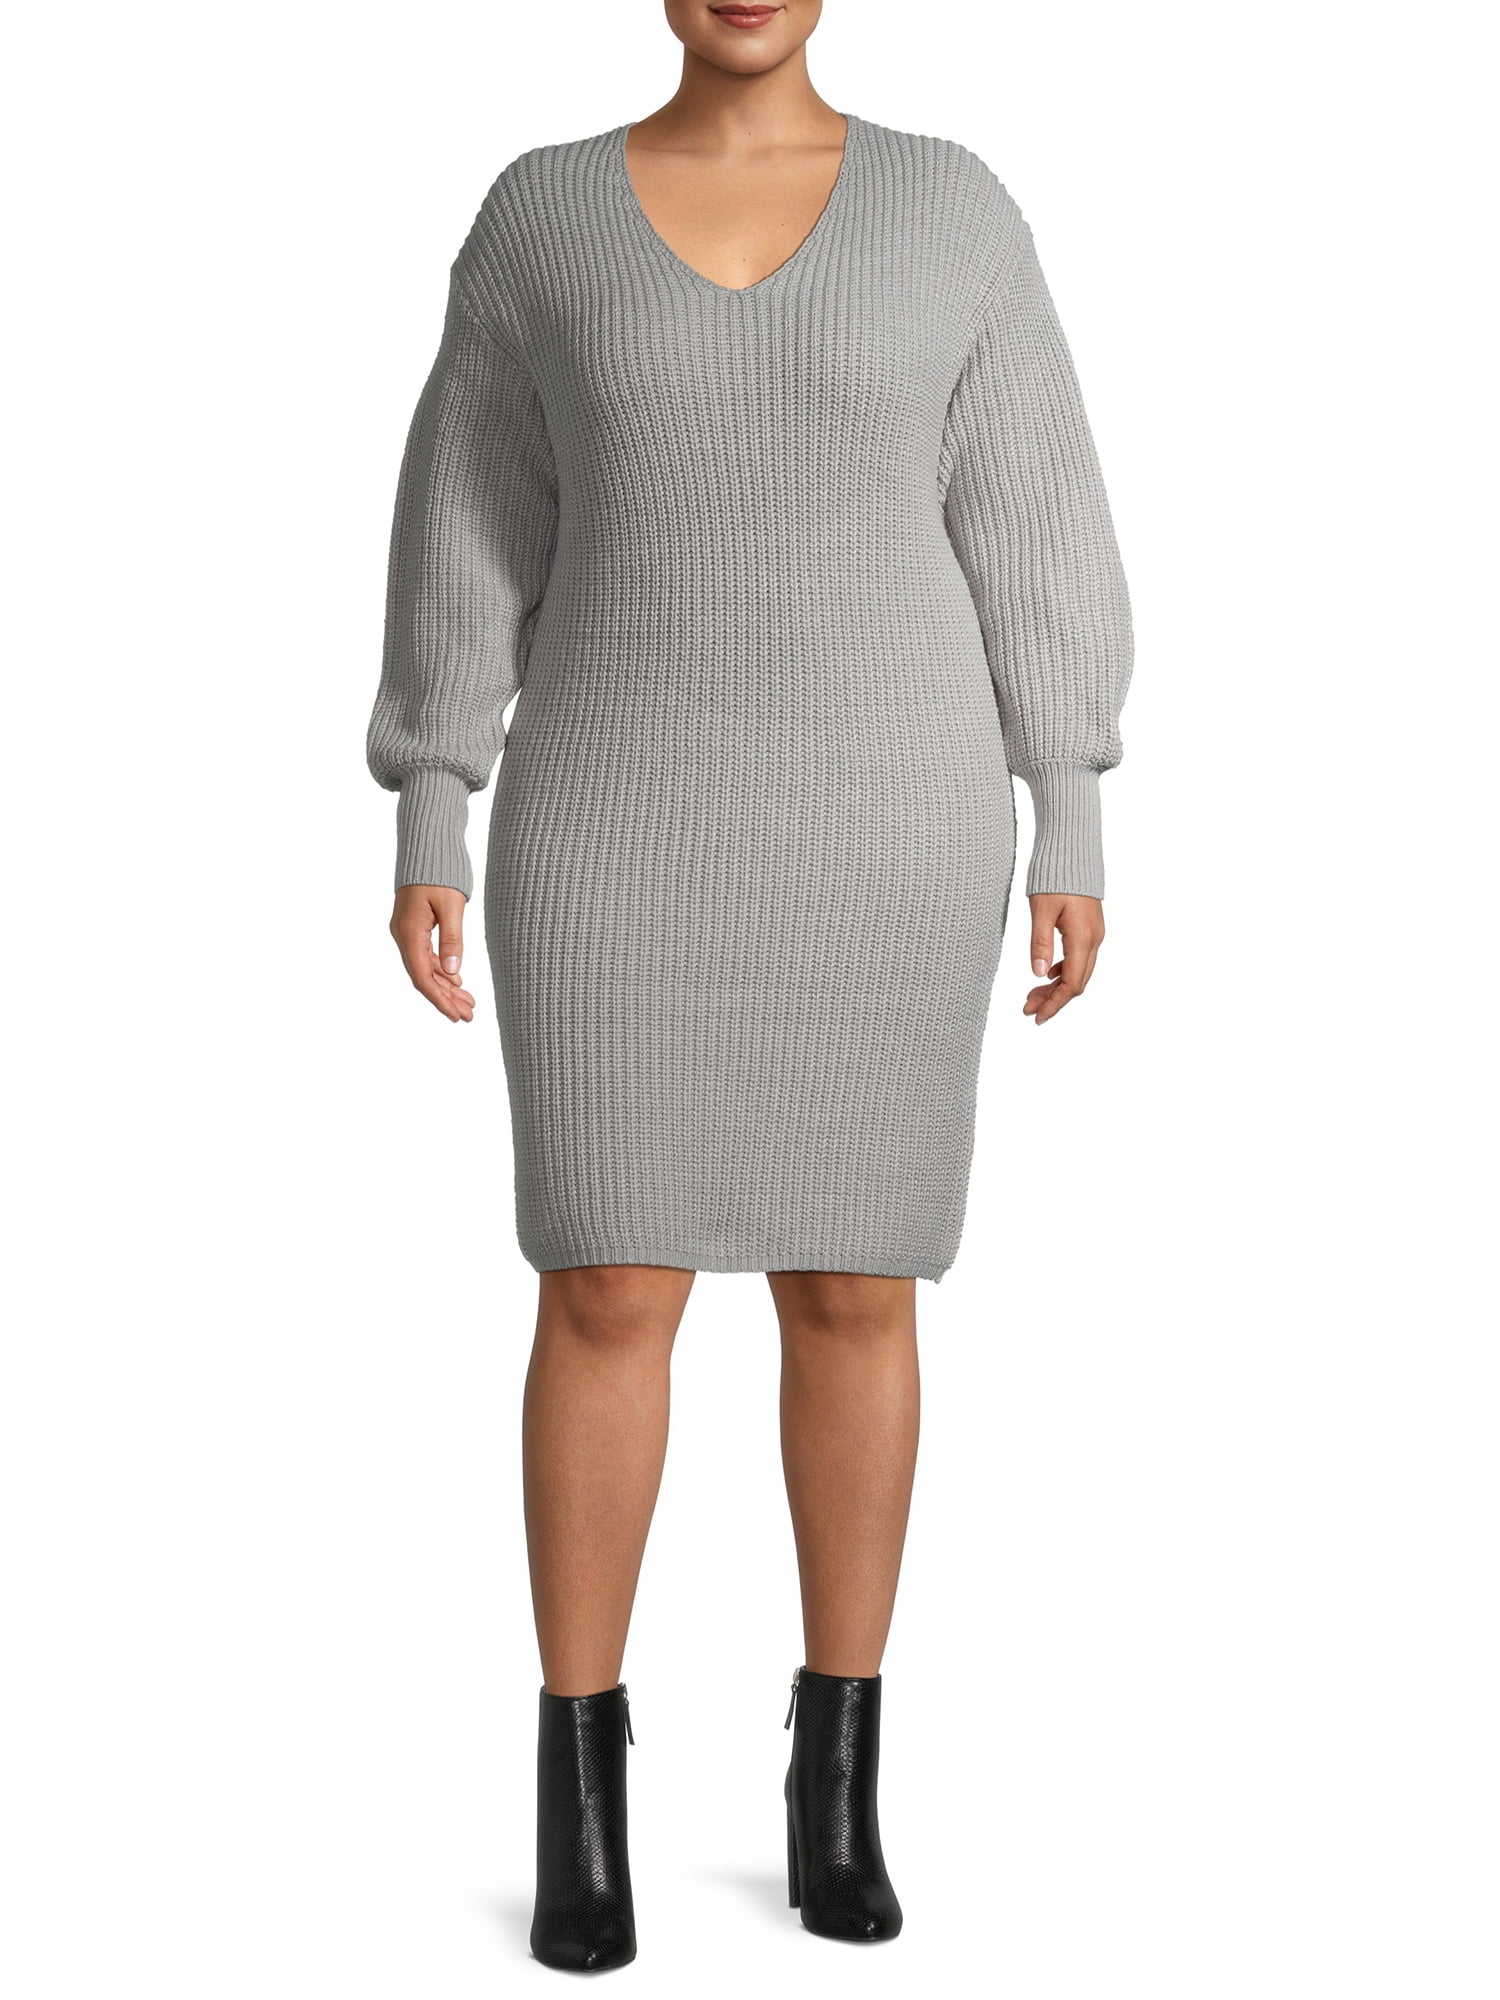 sweater dress walmart